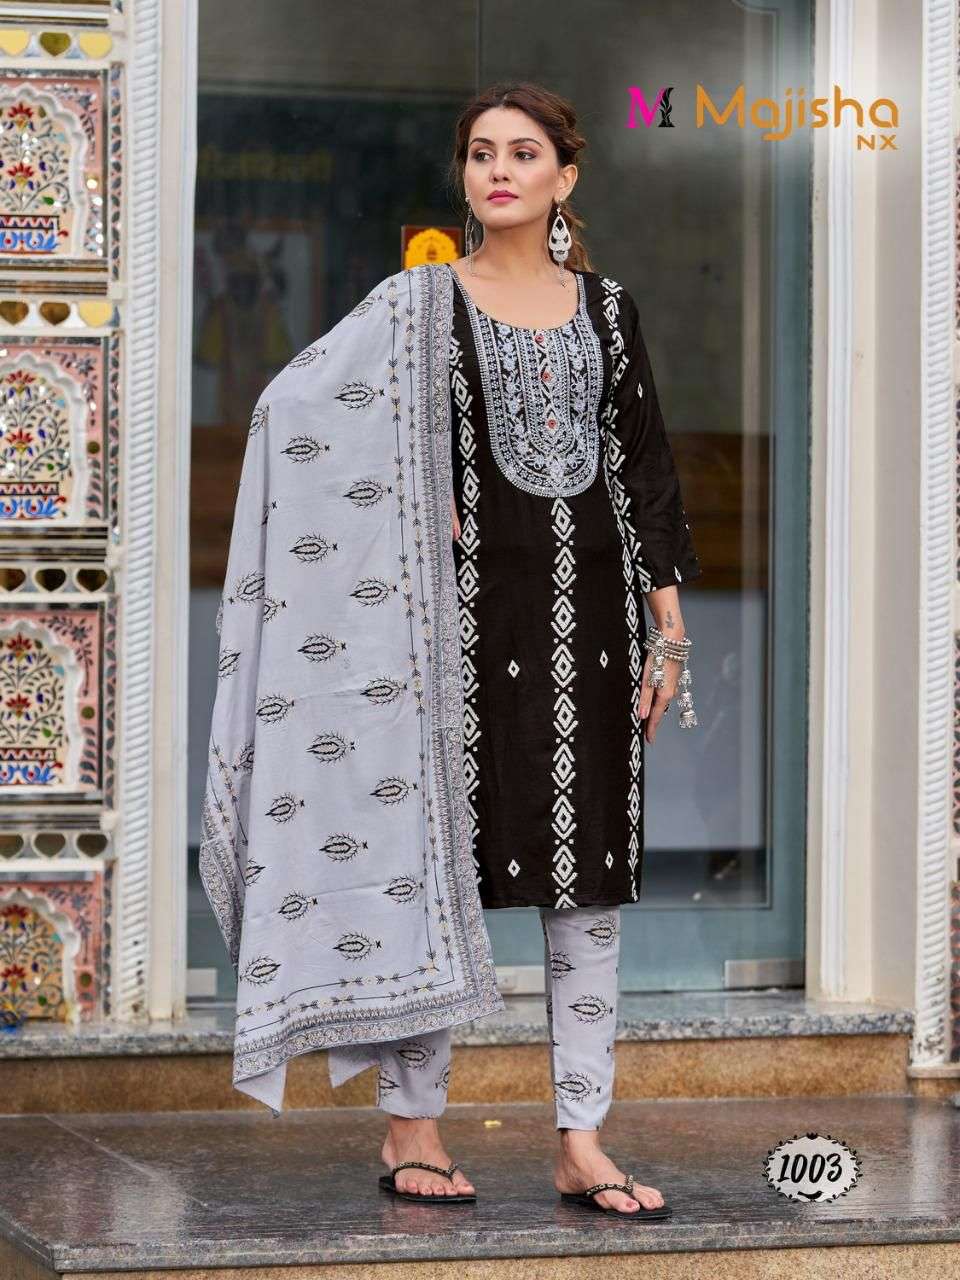 majisha nx kodee vol-1 1001-1008 seires reyon batik printed ready made salwar suits online seller surat 